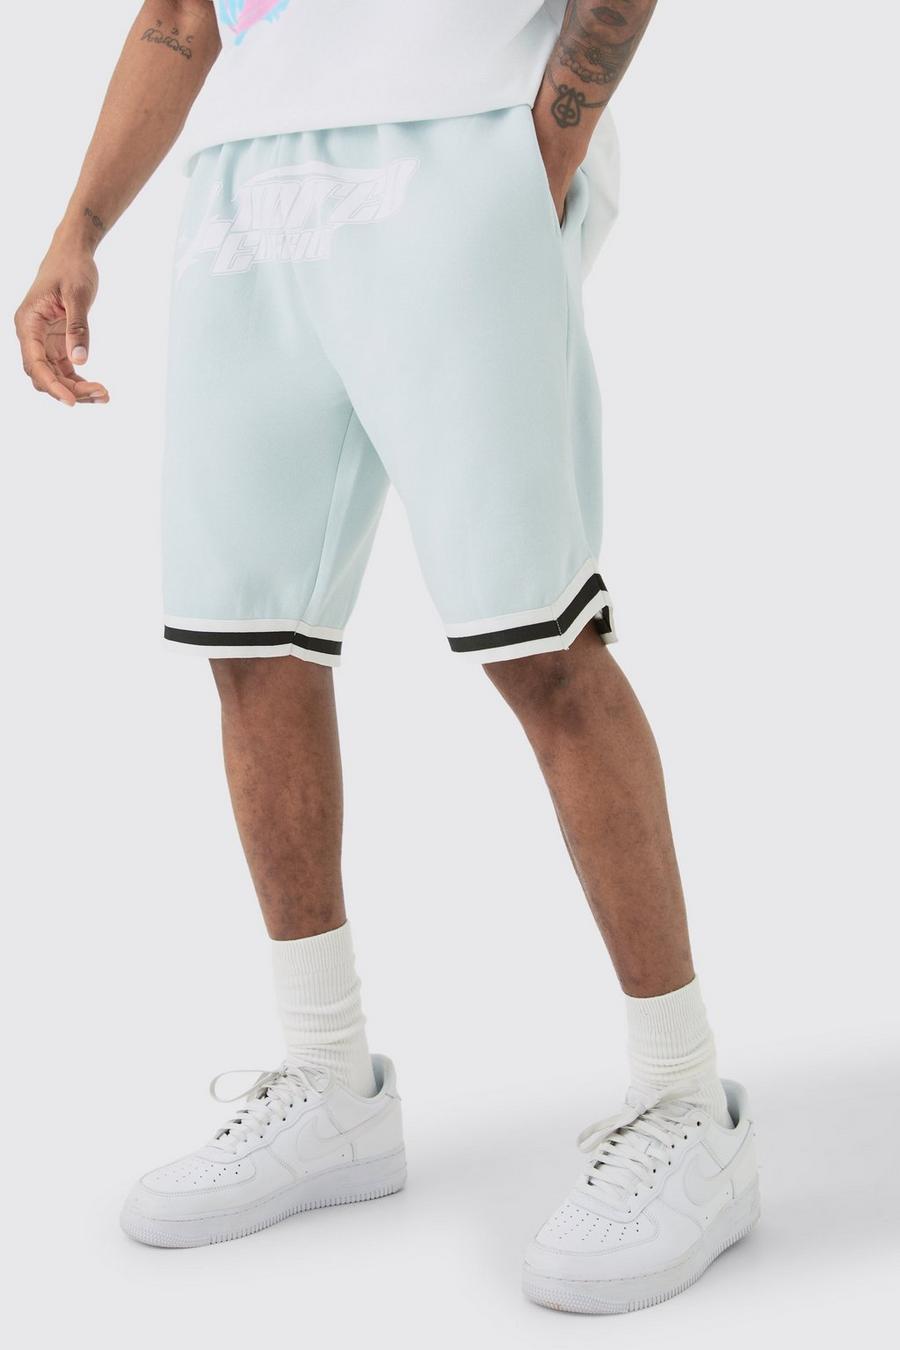 Tall lockere Limited Edition Basketball-Shorts in Hellblau, Light blue